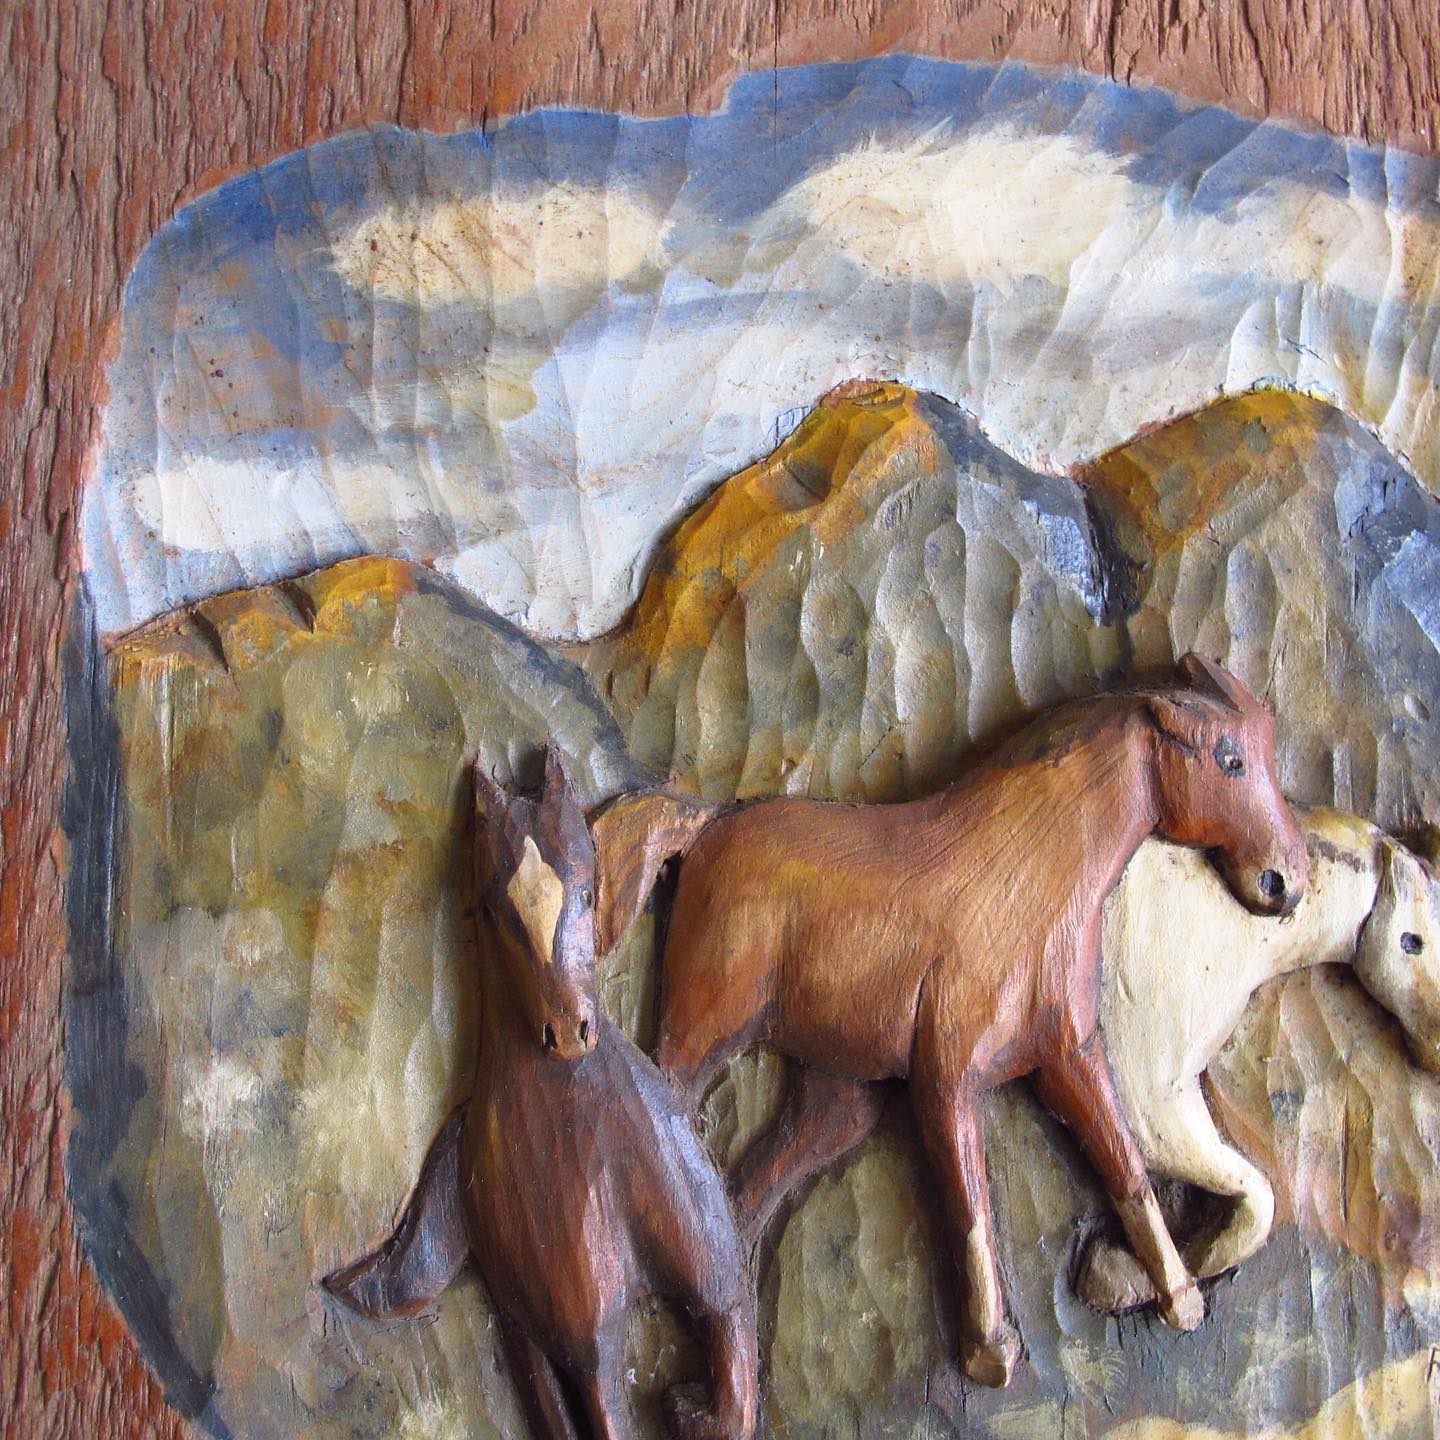 Polychrome Wild Horse Handcarved American Folk Art Wooden Relief, c. 1940